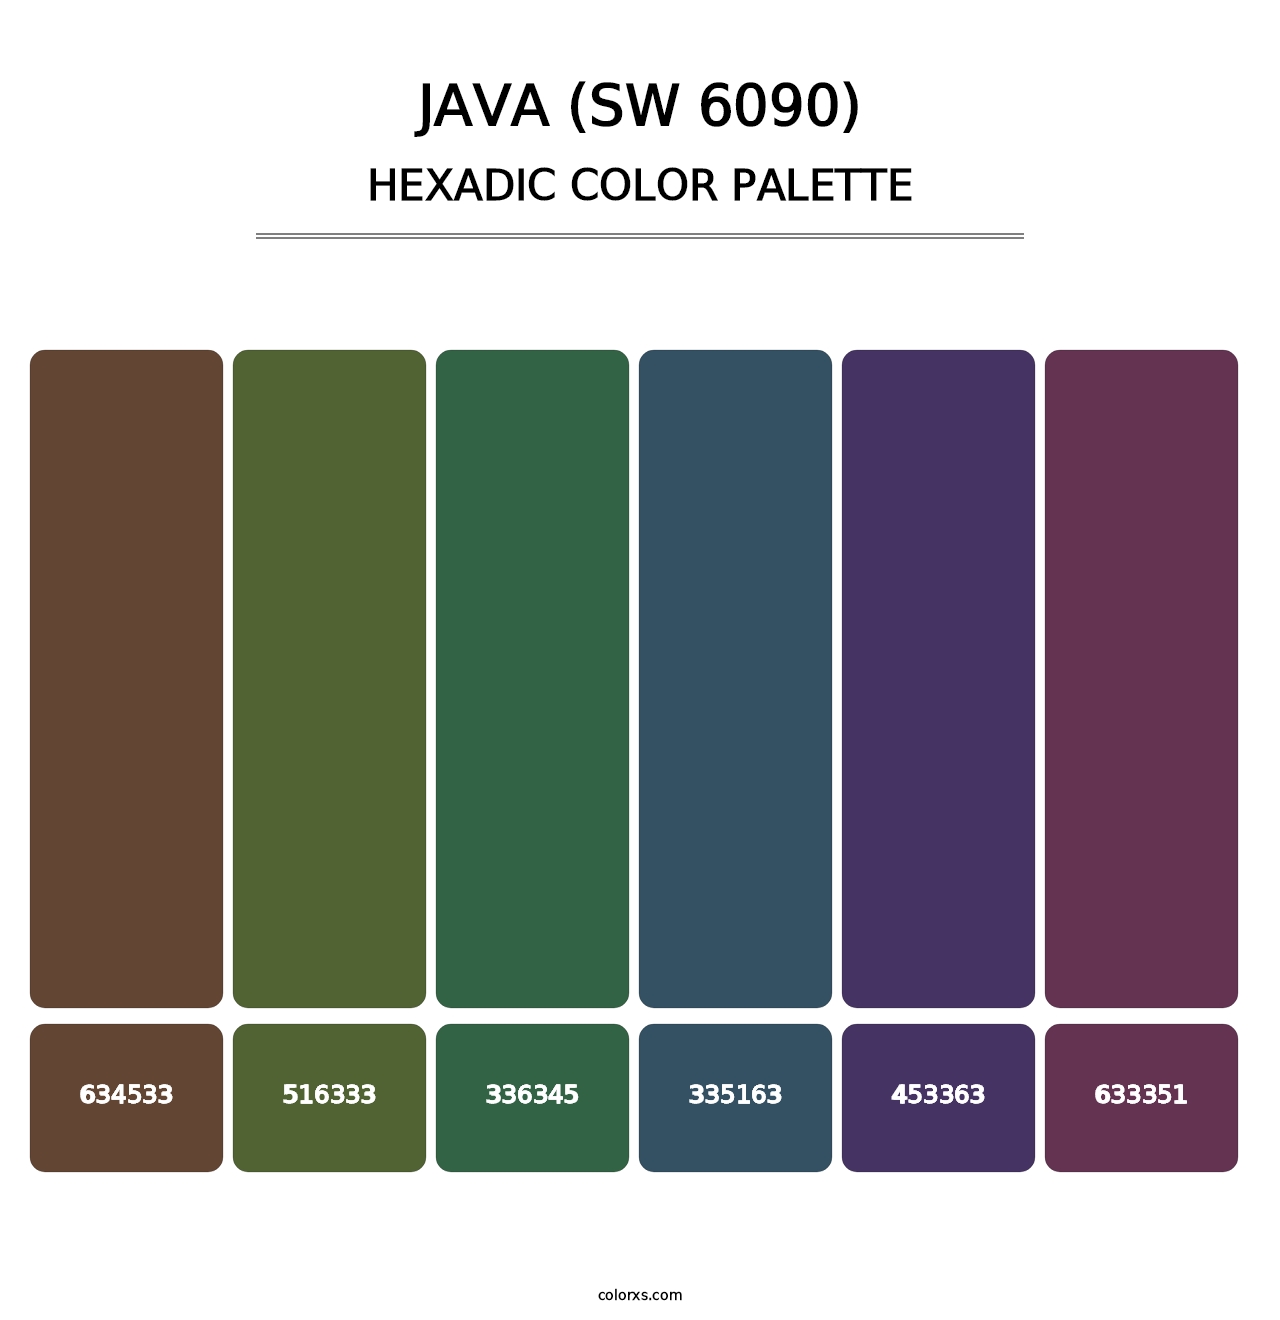 Java (SW 6090) - Hexadic Color Palette